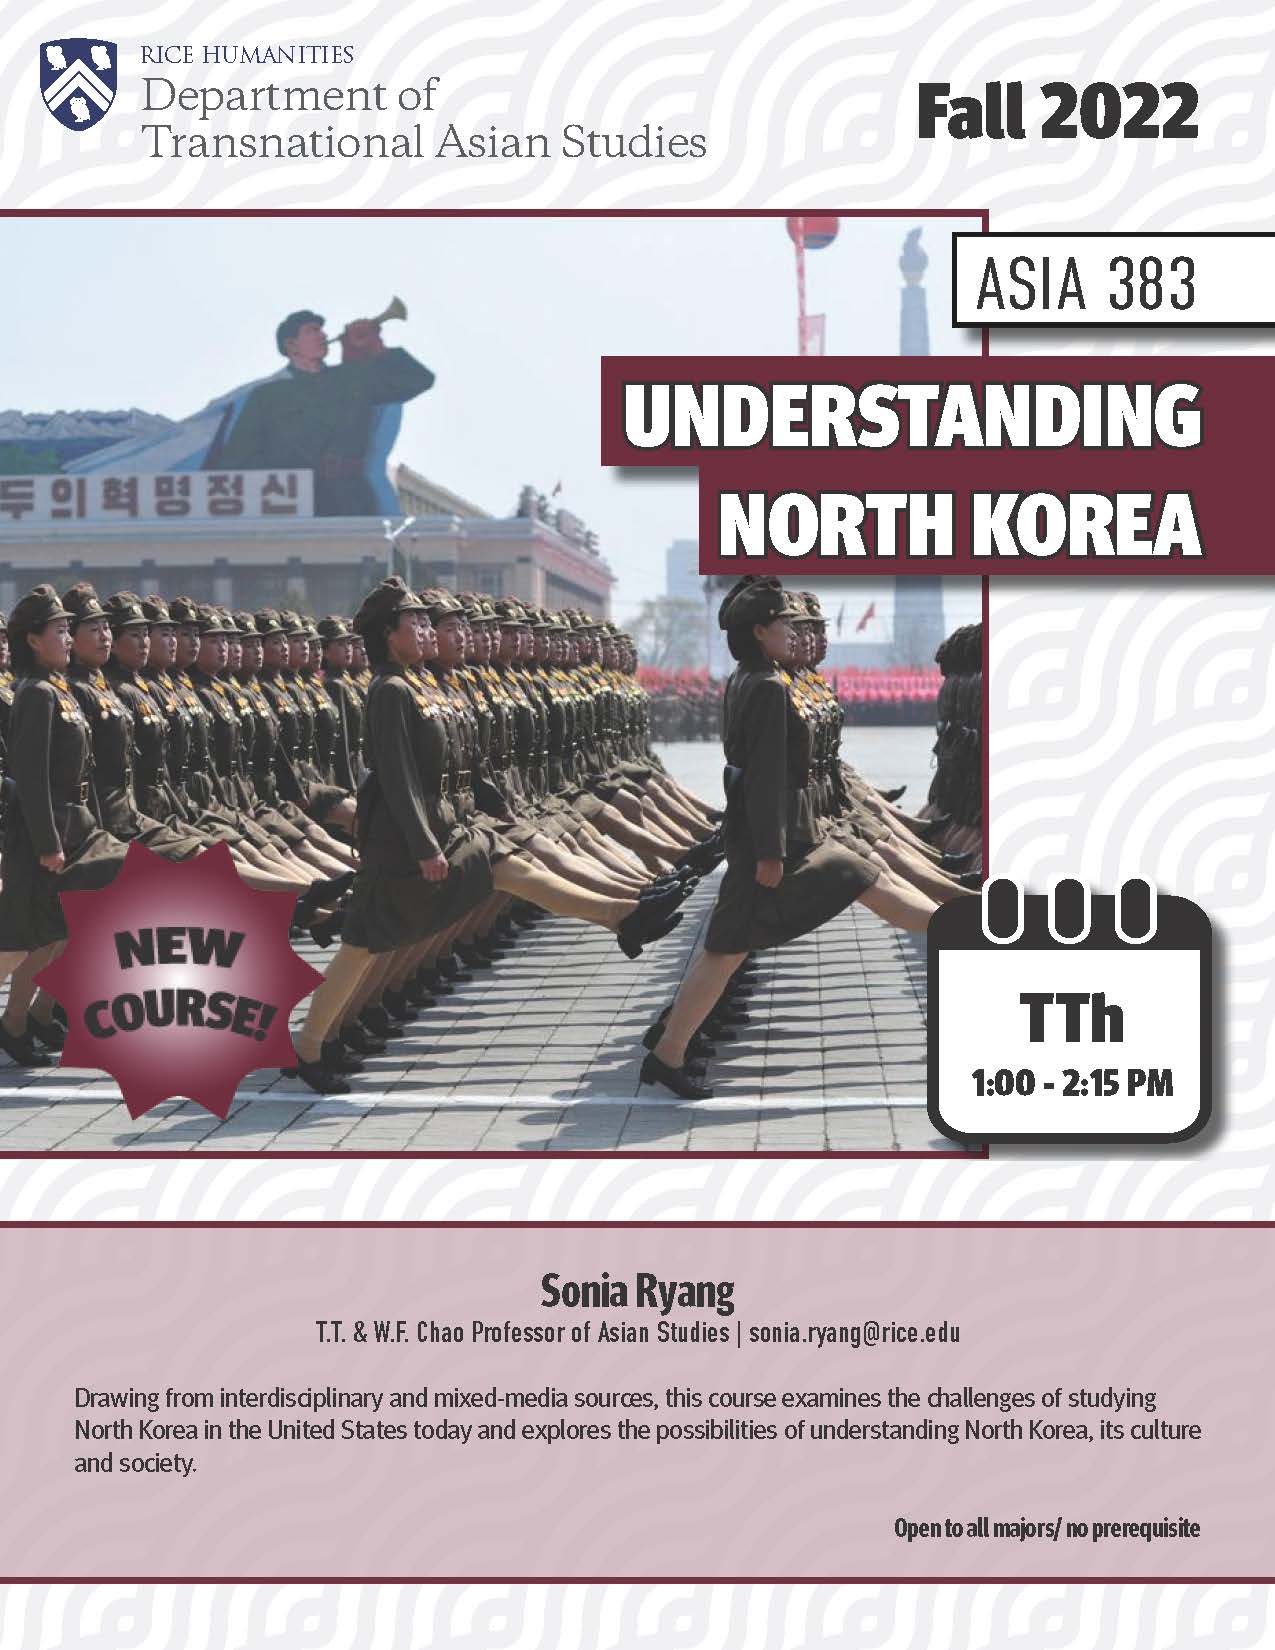 ASIA 383 course flyer